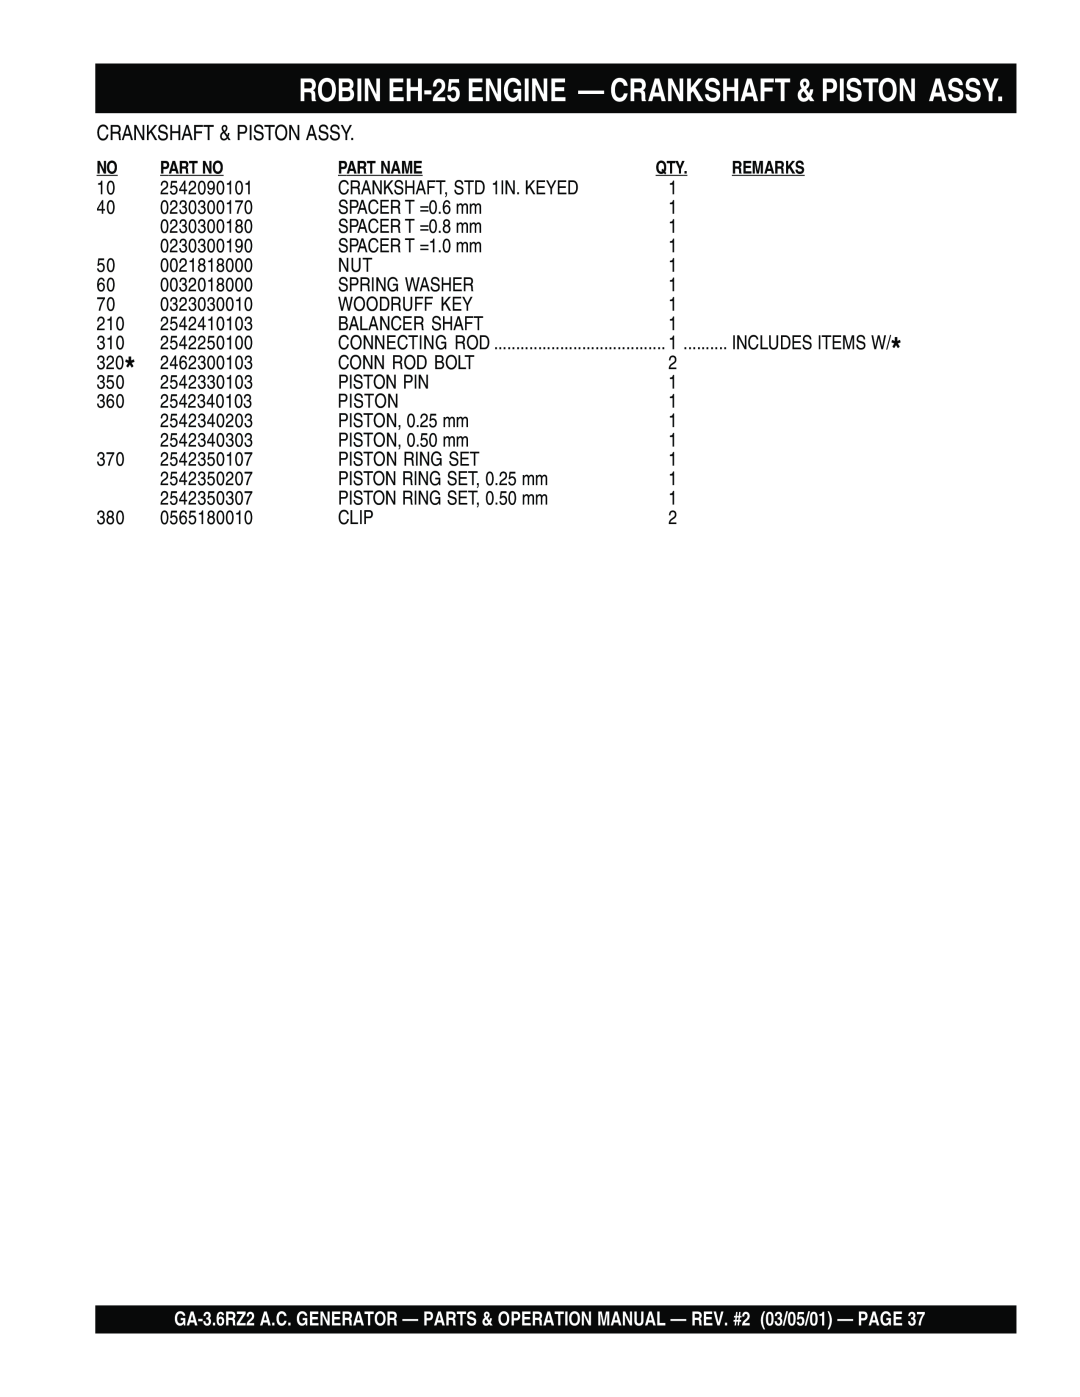 Multiquip GA-3.6RZ2 operation manual ROBIN EH-25ENGINE — CRANKSHAFT & PISTON ASSY, 2542090101 